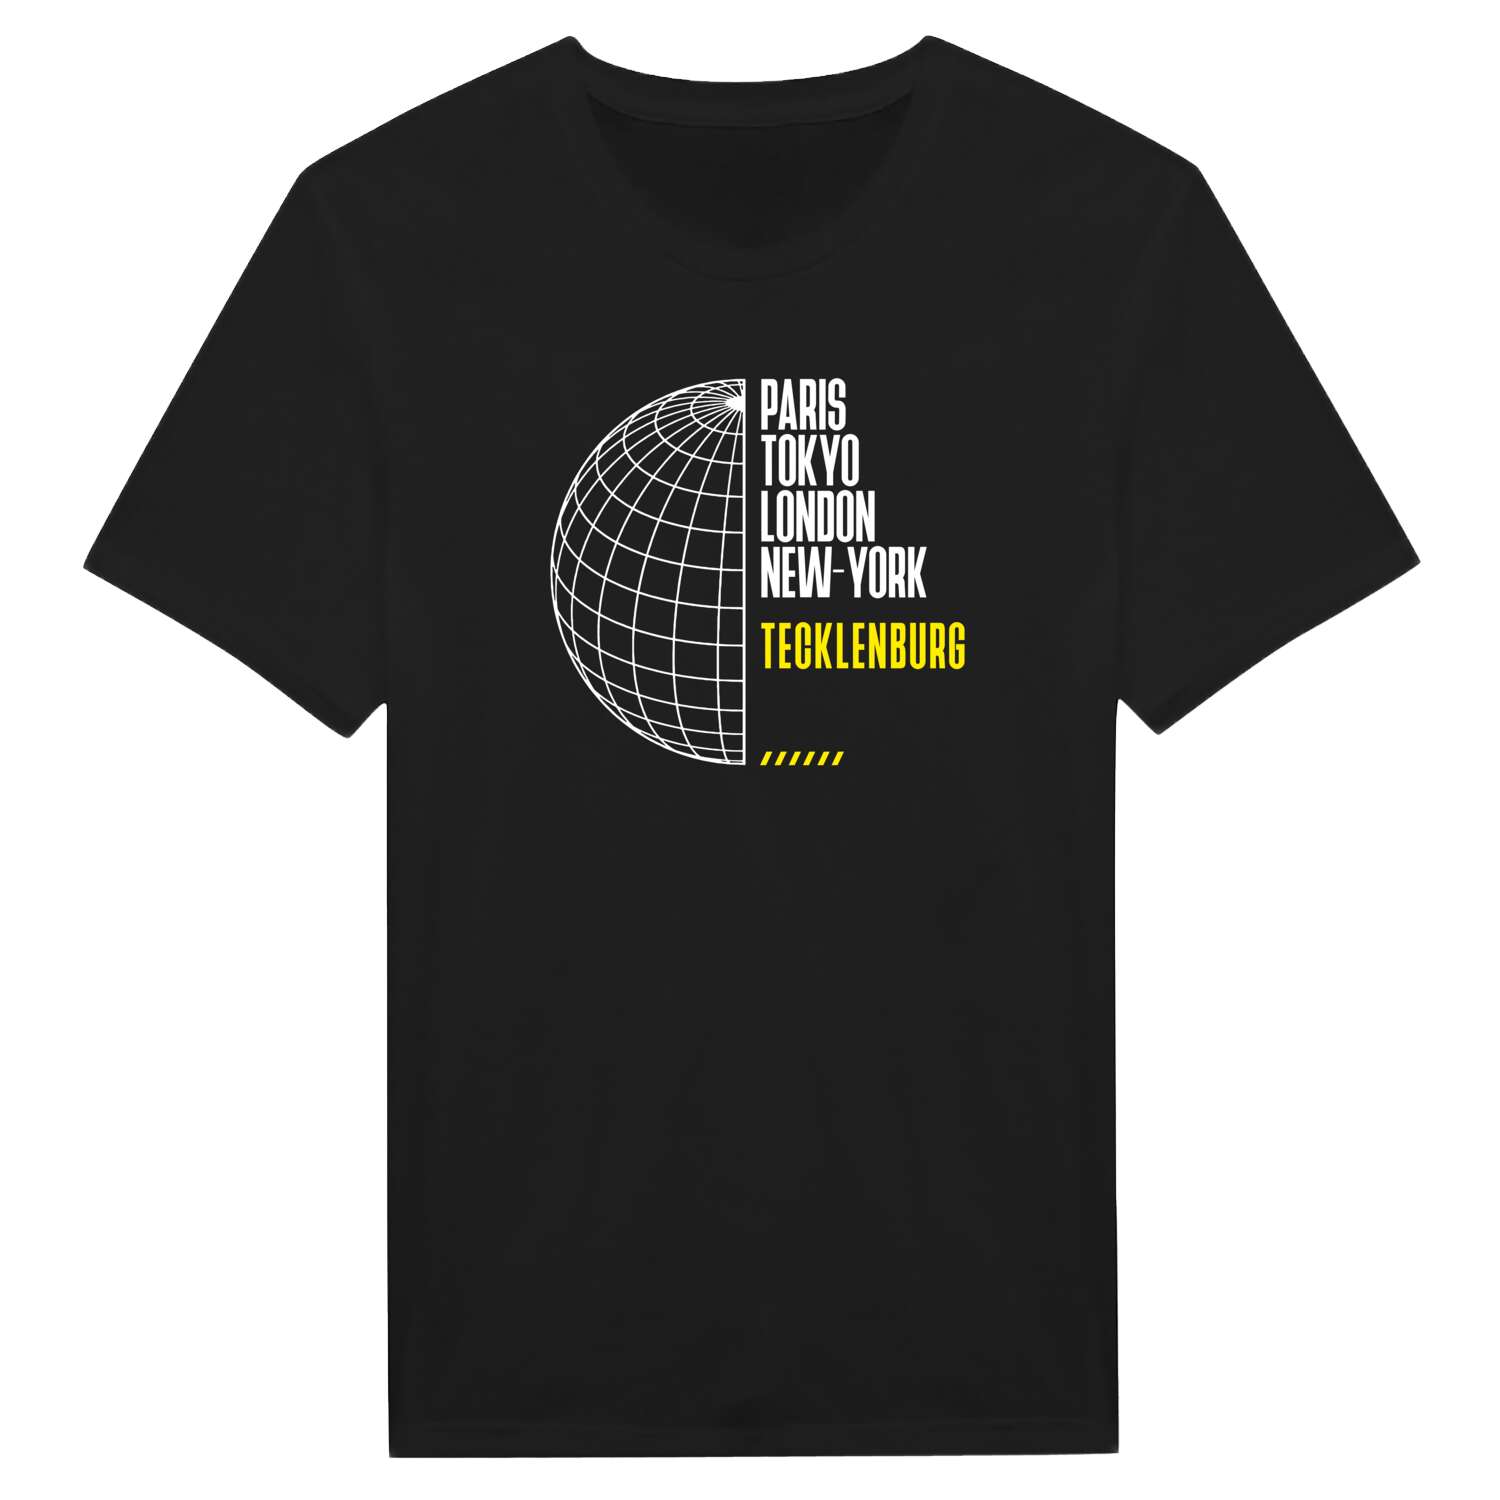 Tecklenburg T-Shirt »Paris Tokyo London«